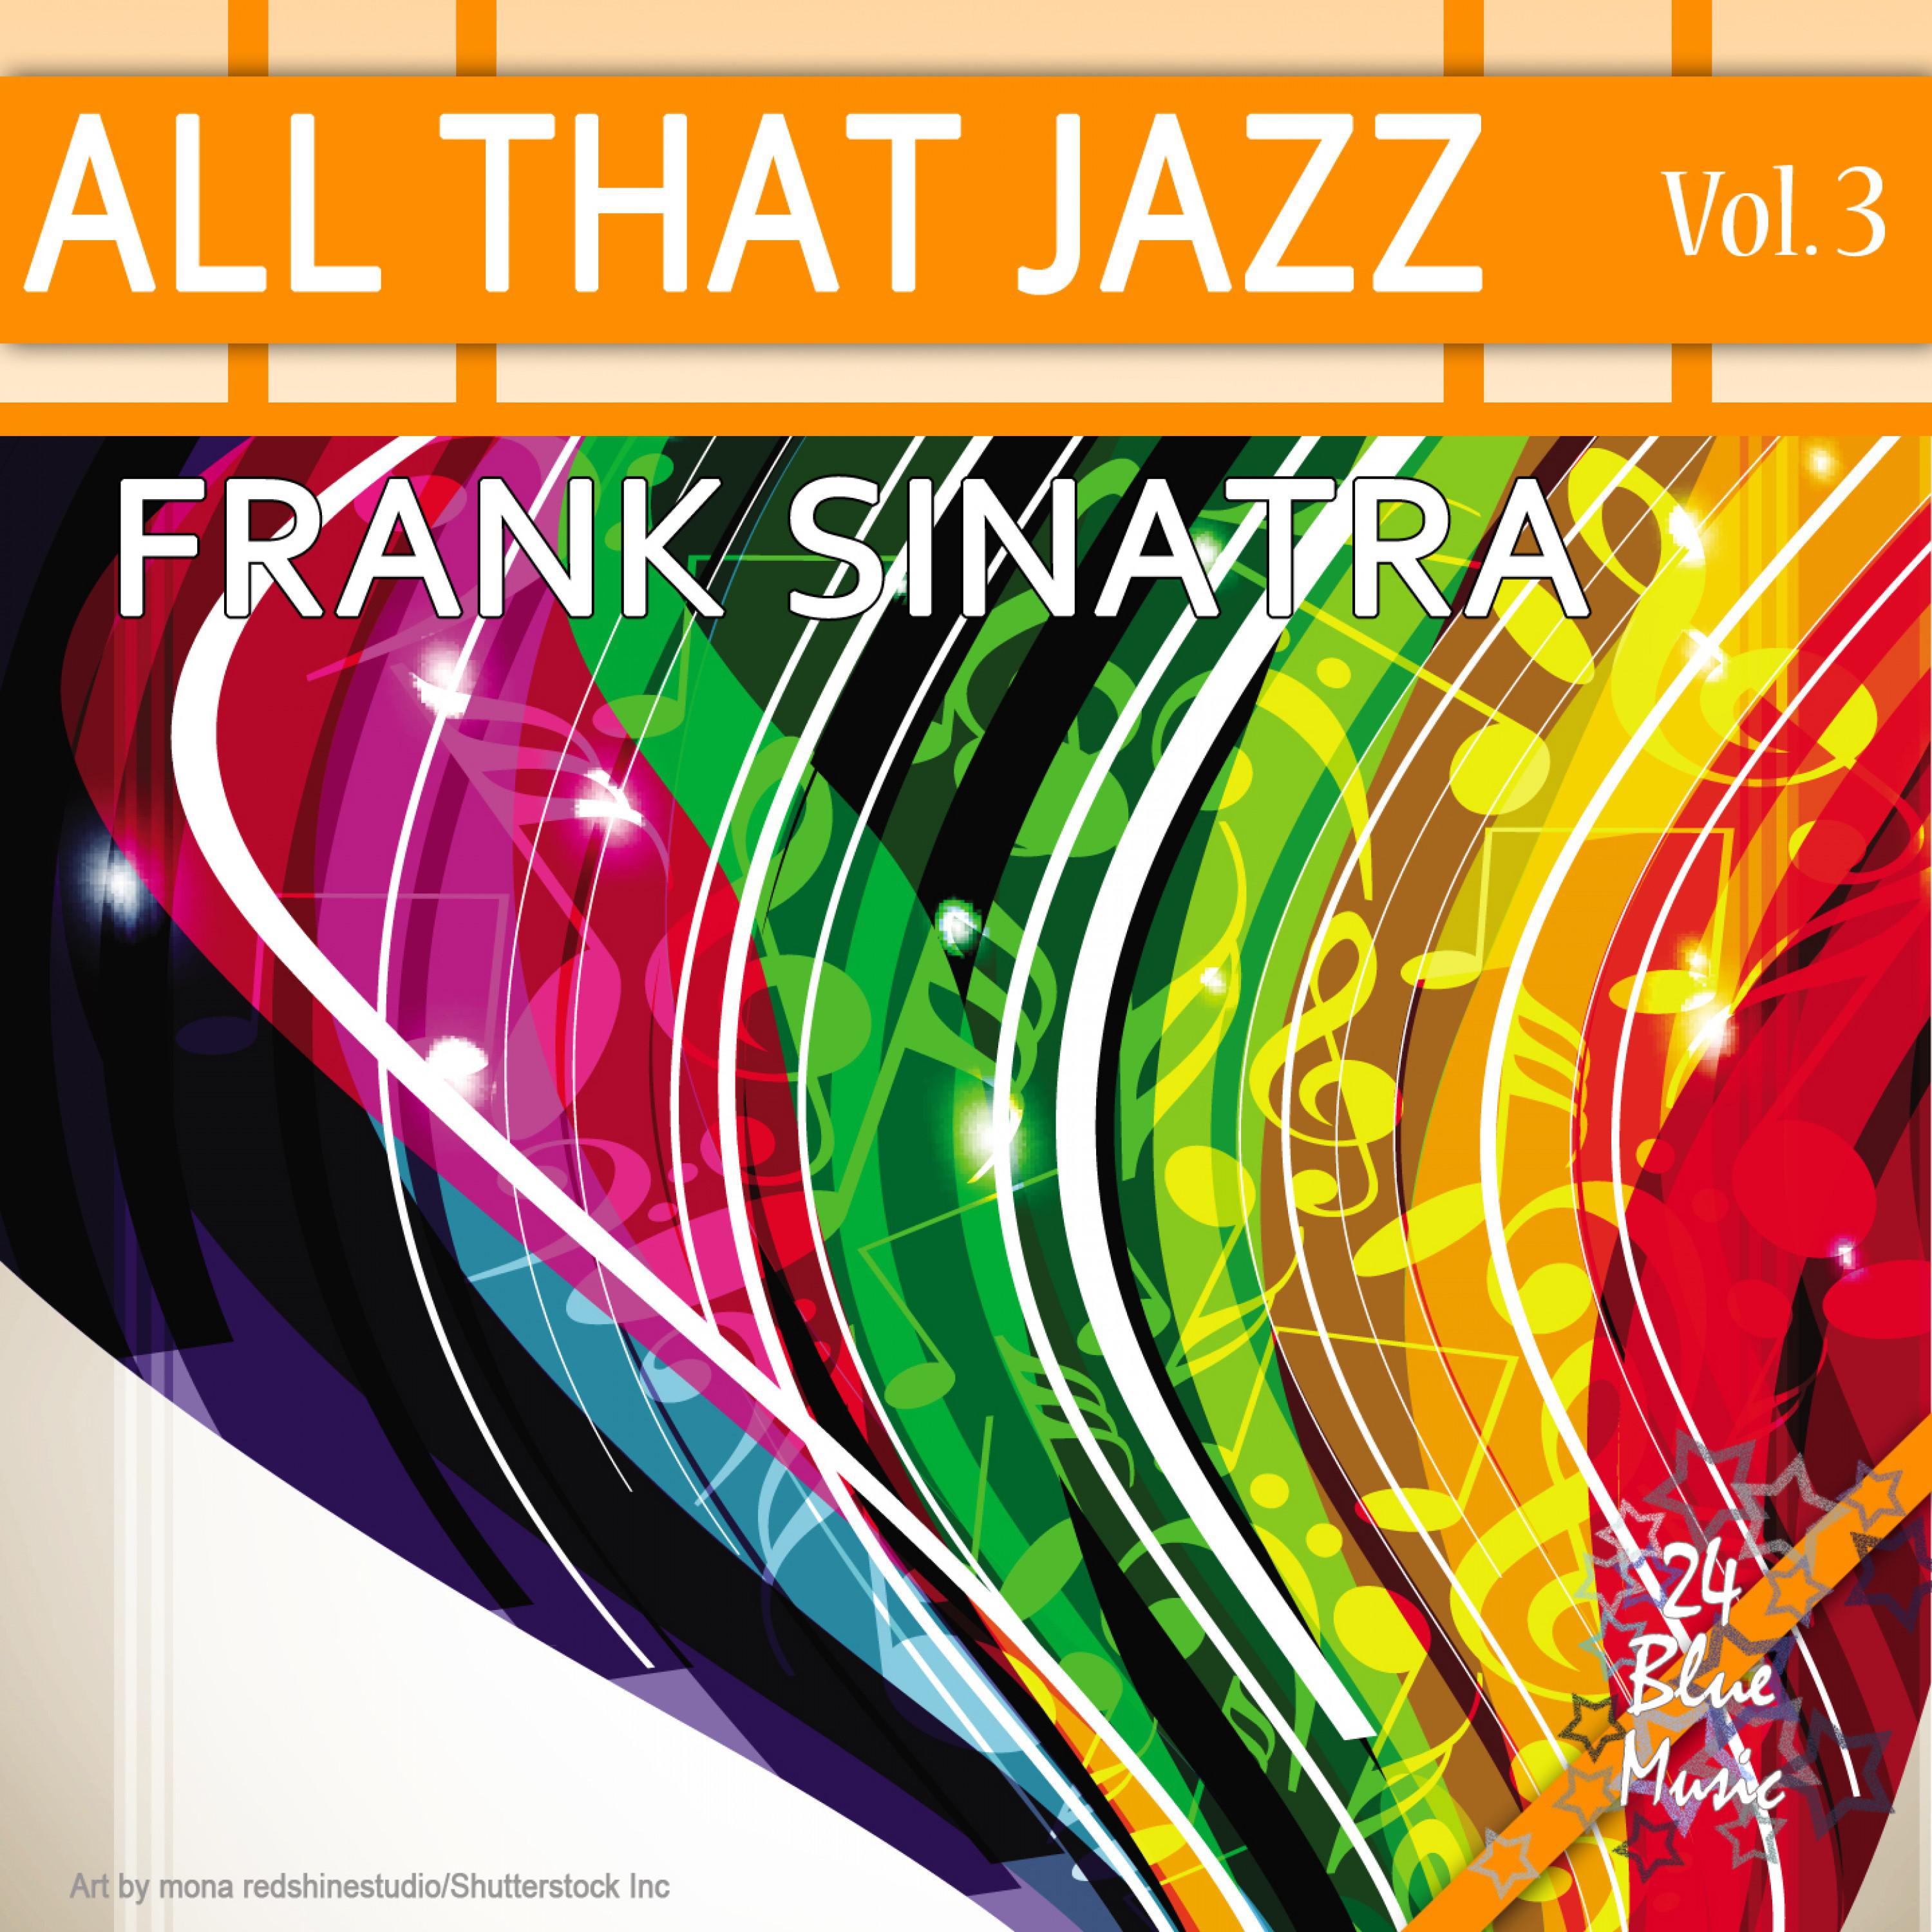 All That Jazz - Frank Sinatra Vol. 3